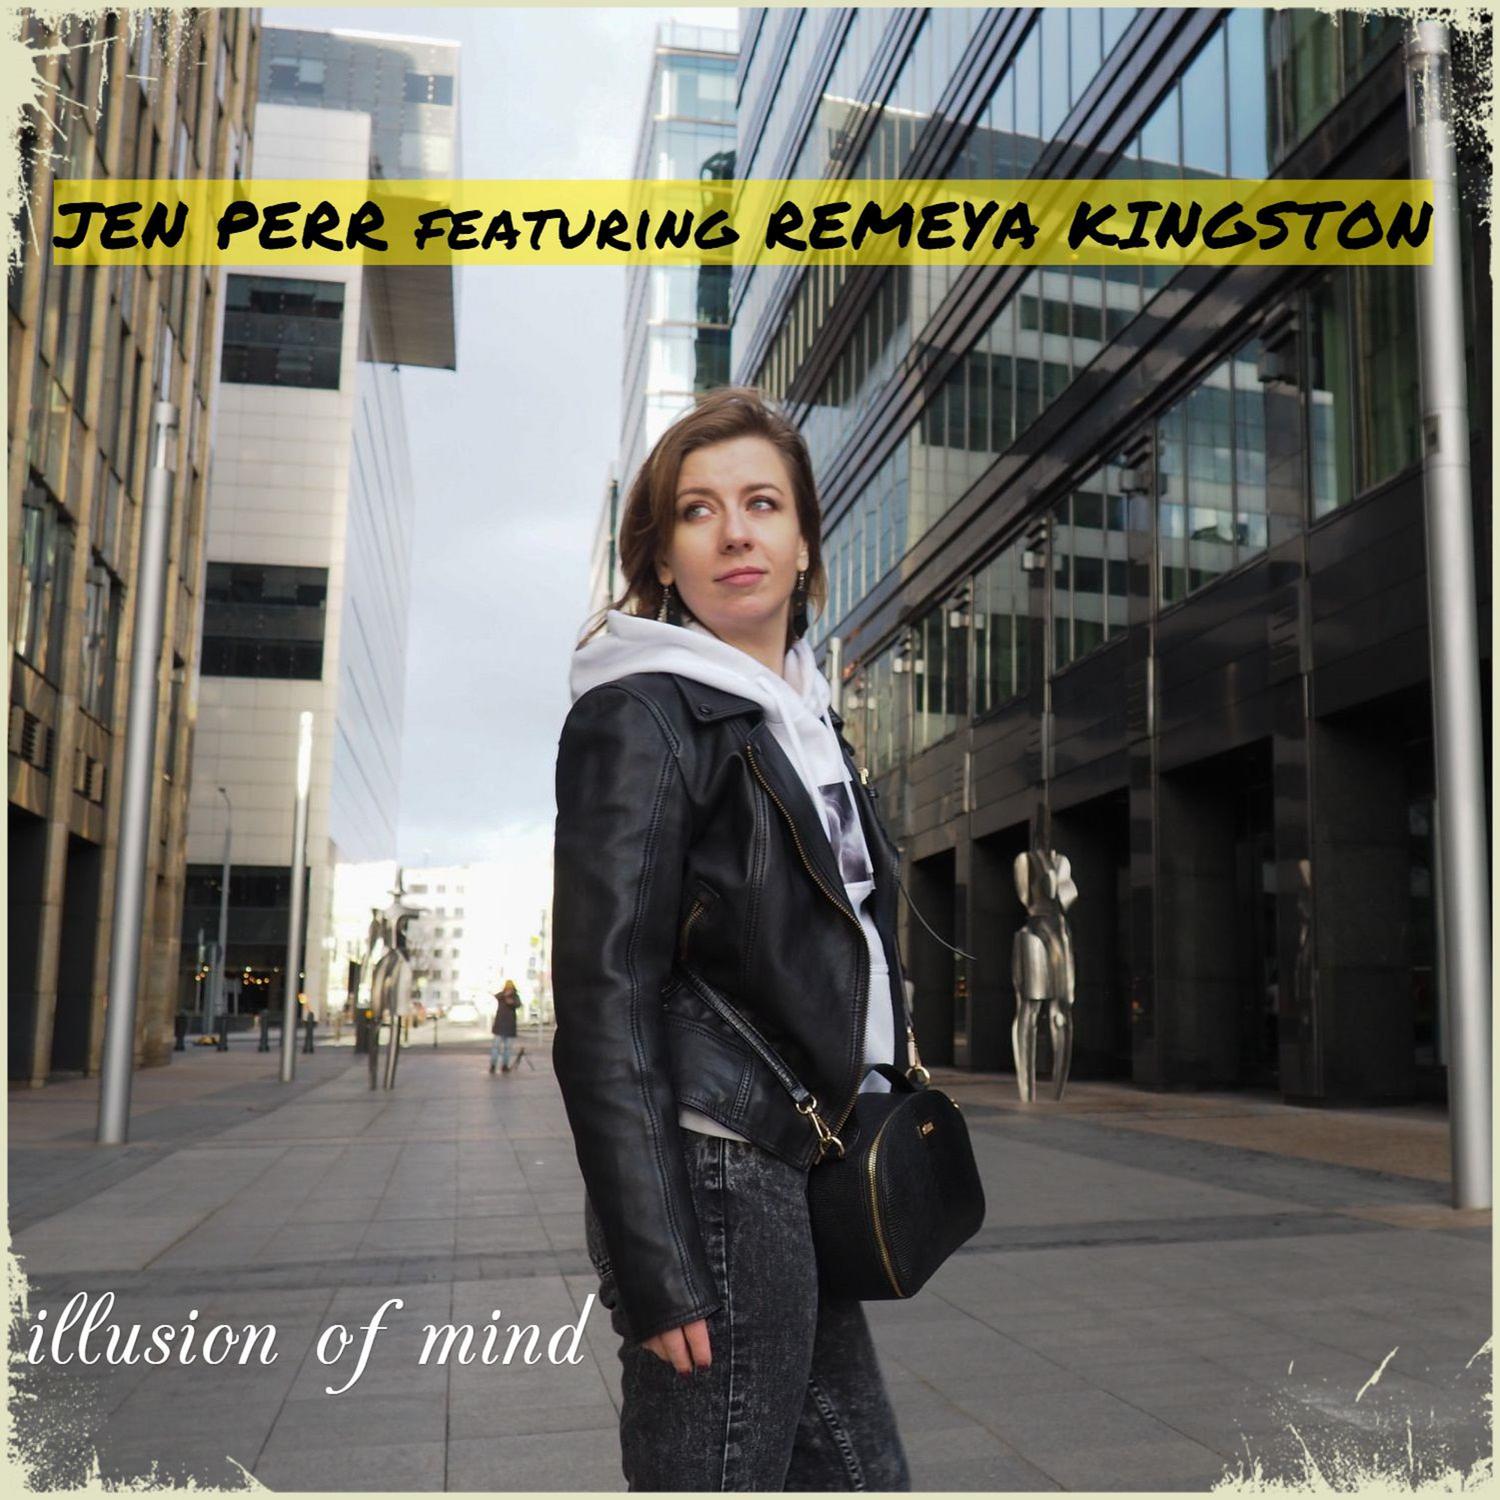 Jen Perr - Illusion of Mind (Feat. Remeya Kingston)